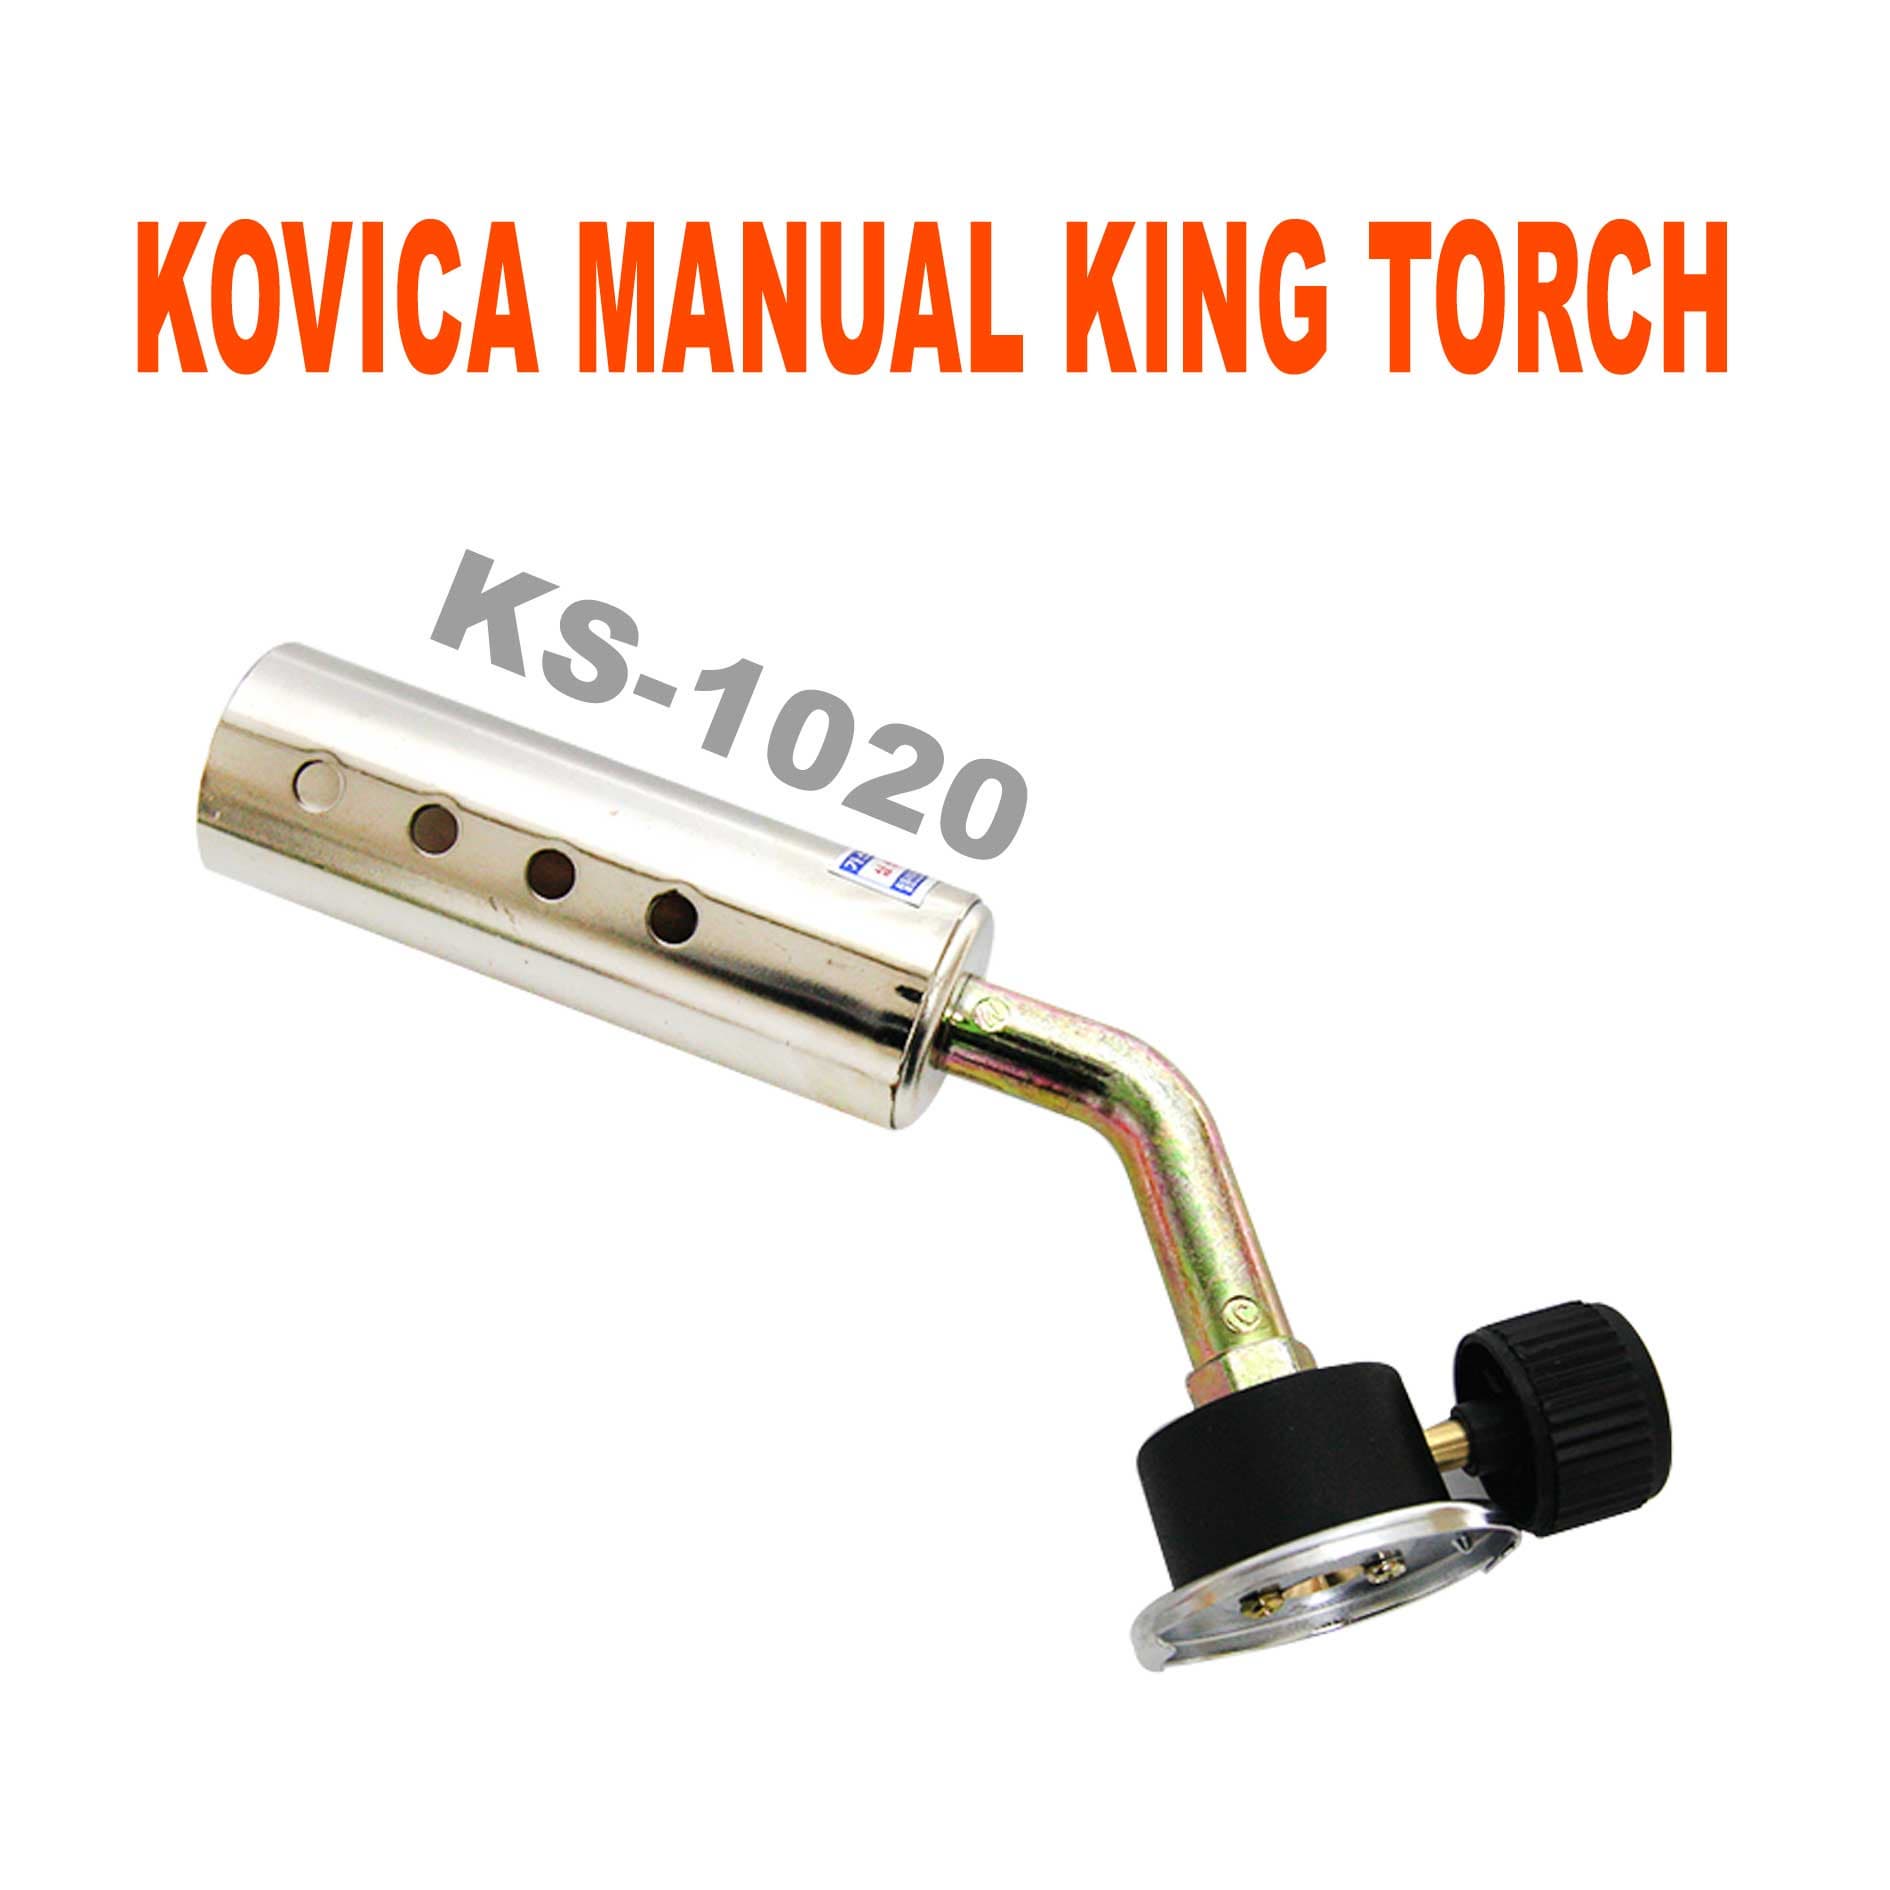 Gas Torch Series manual. Ks1020.